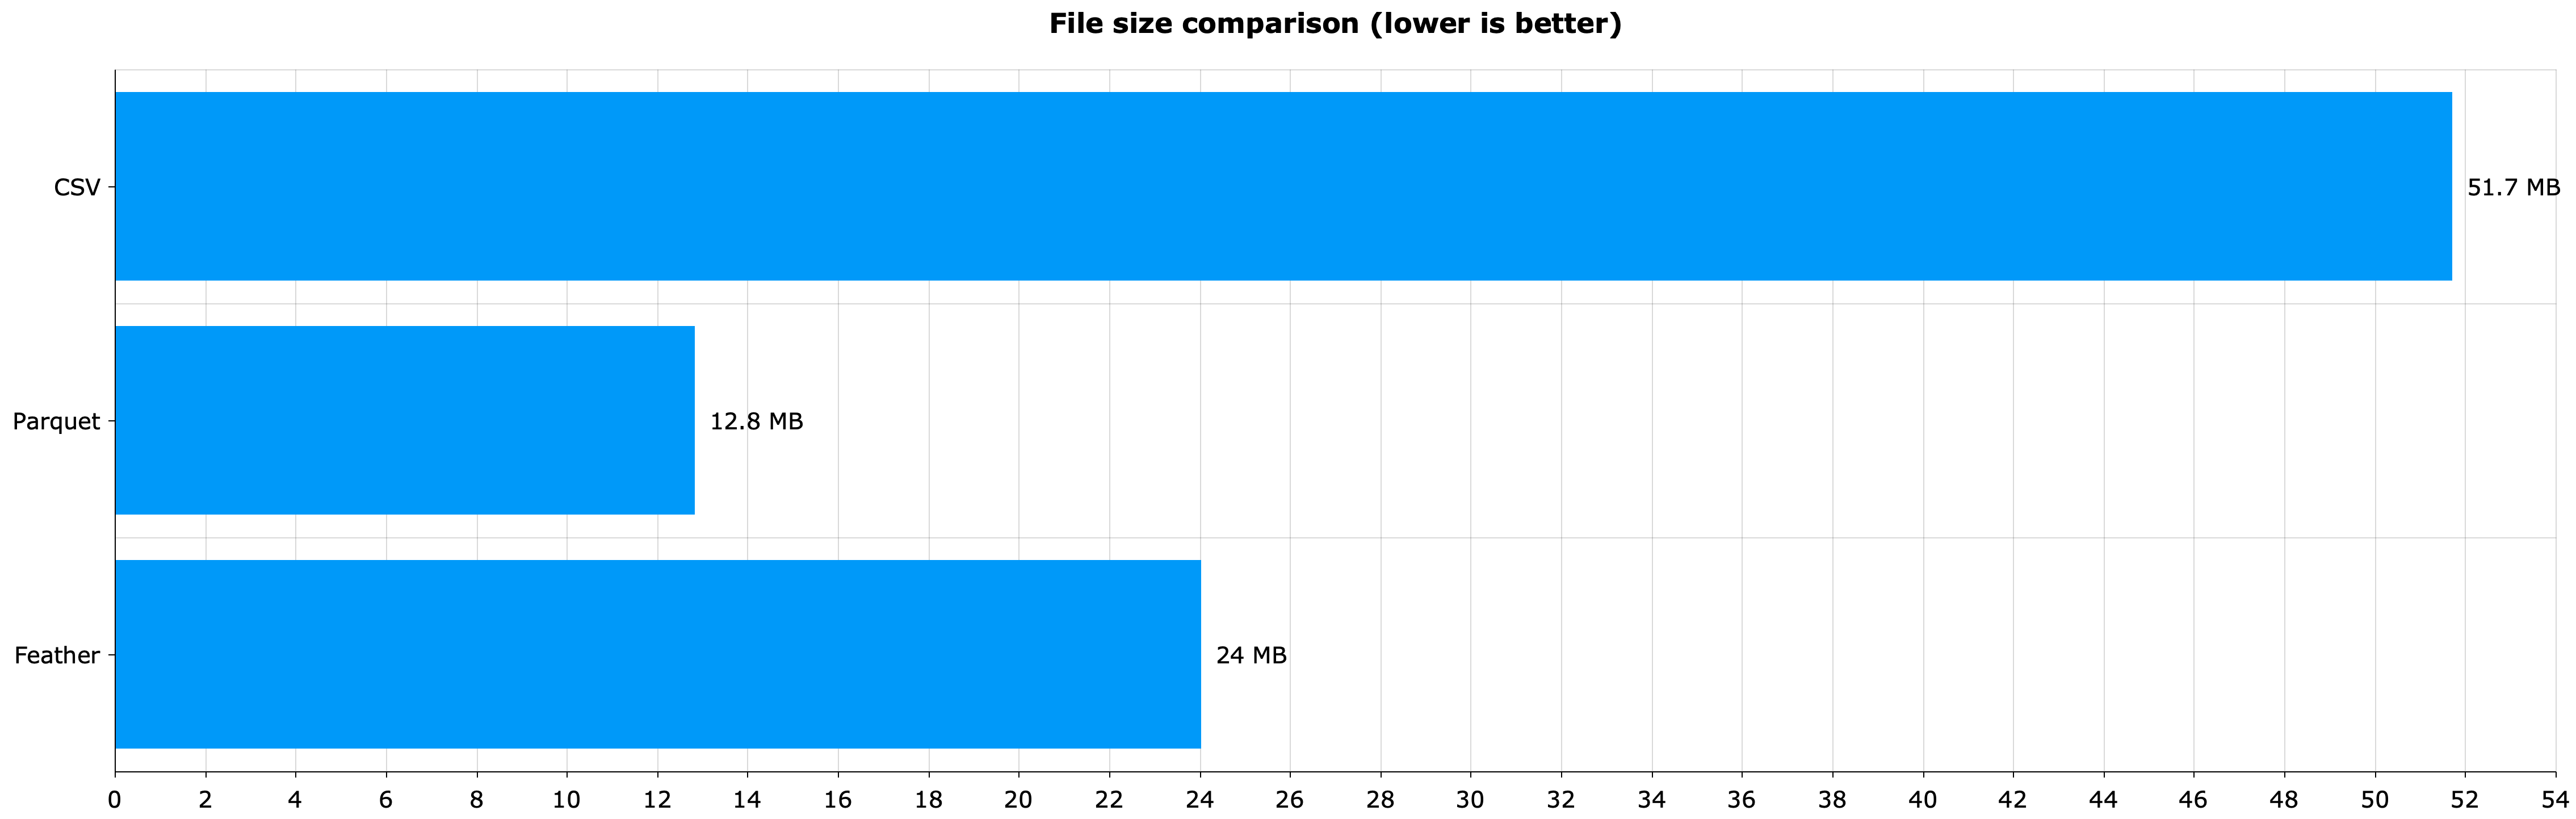 Image 7 - CSV vs. Parquet vs. Feather file size (CSV: 51.7 MB; Parquet: 12.8 MB; Feather: 24 MB)